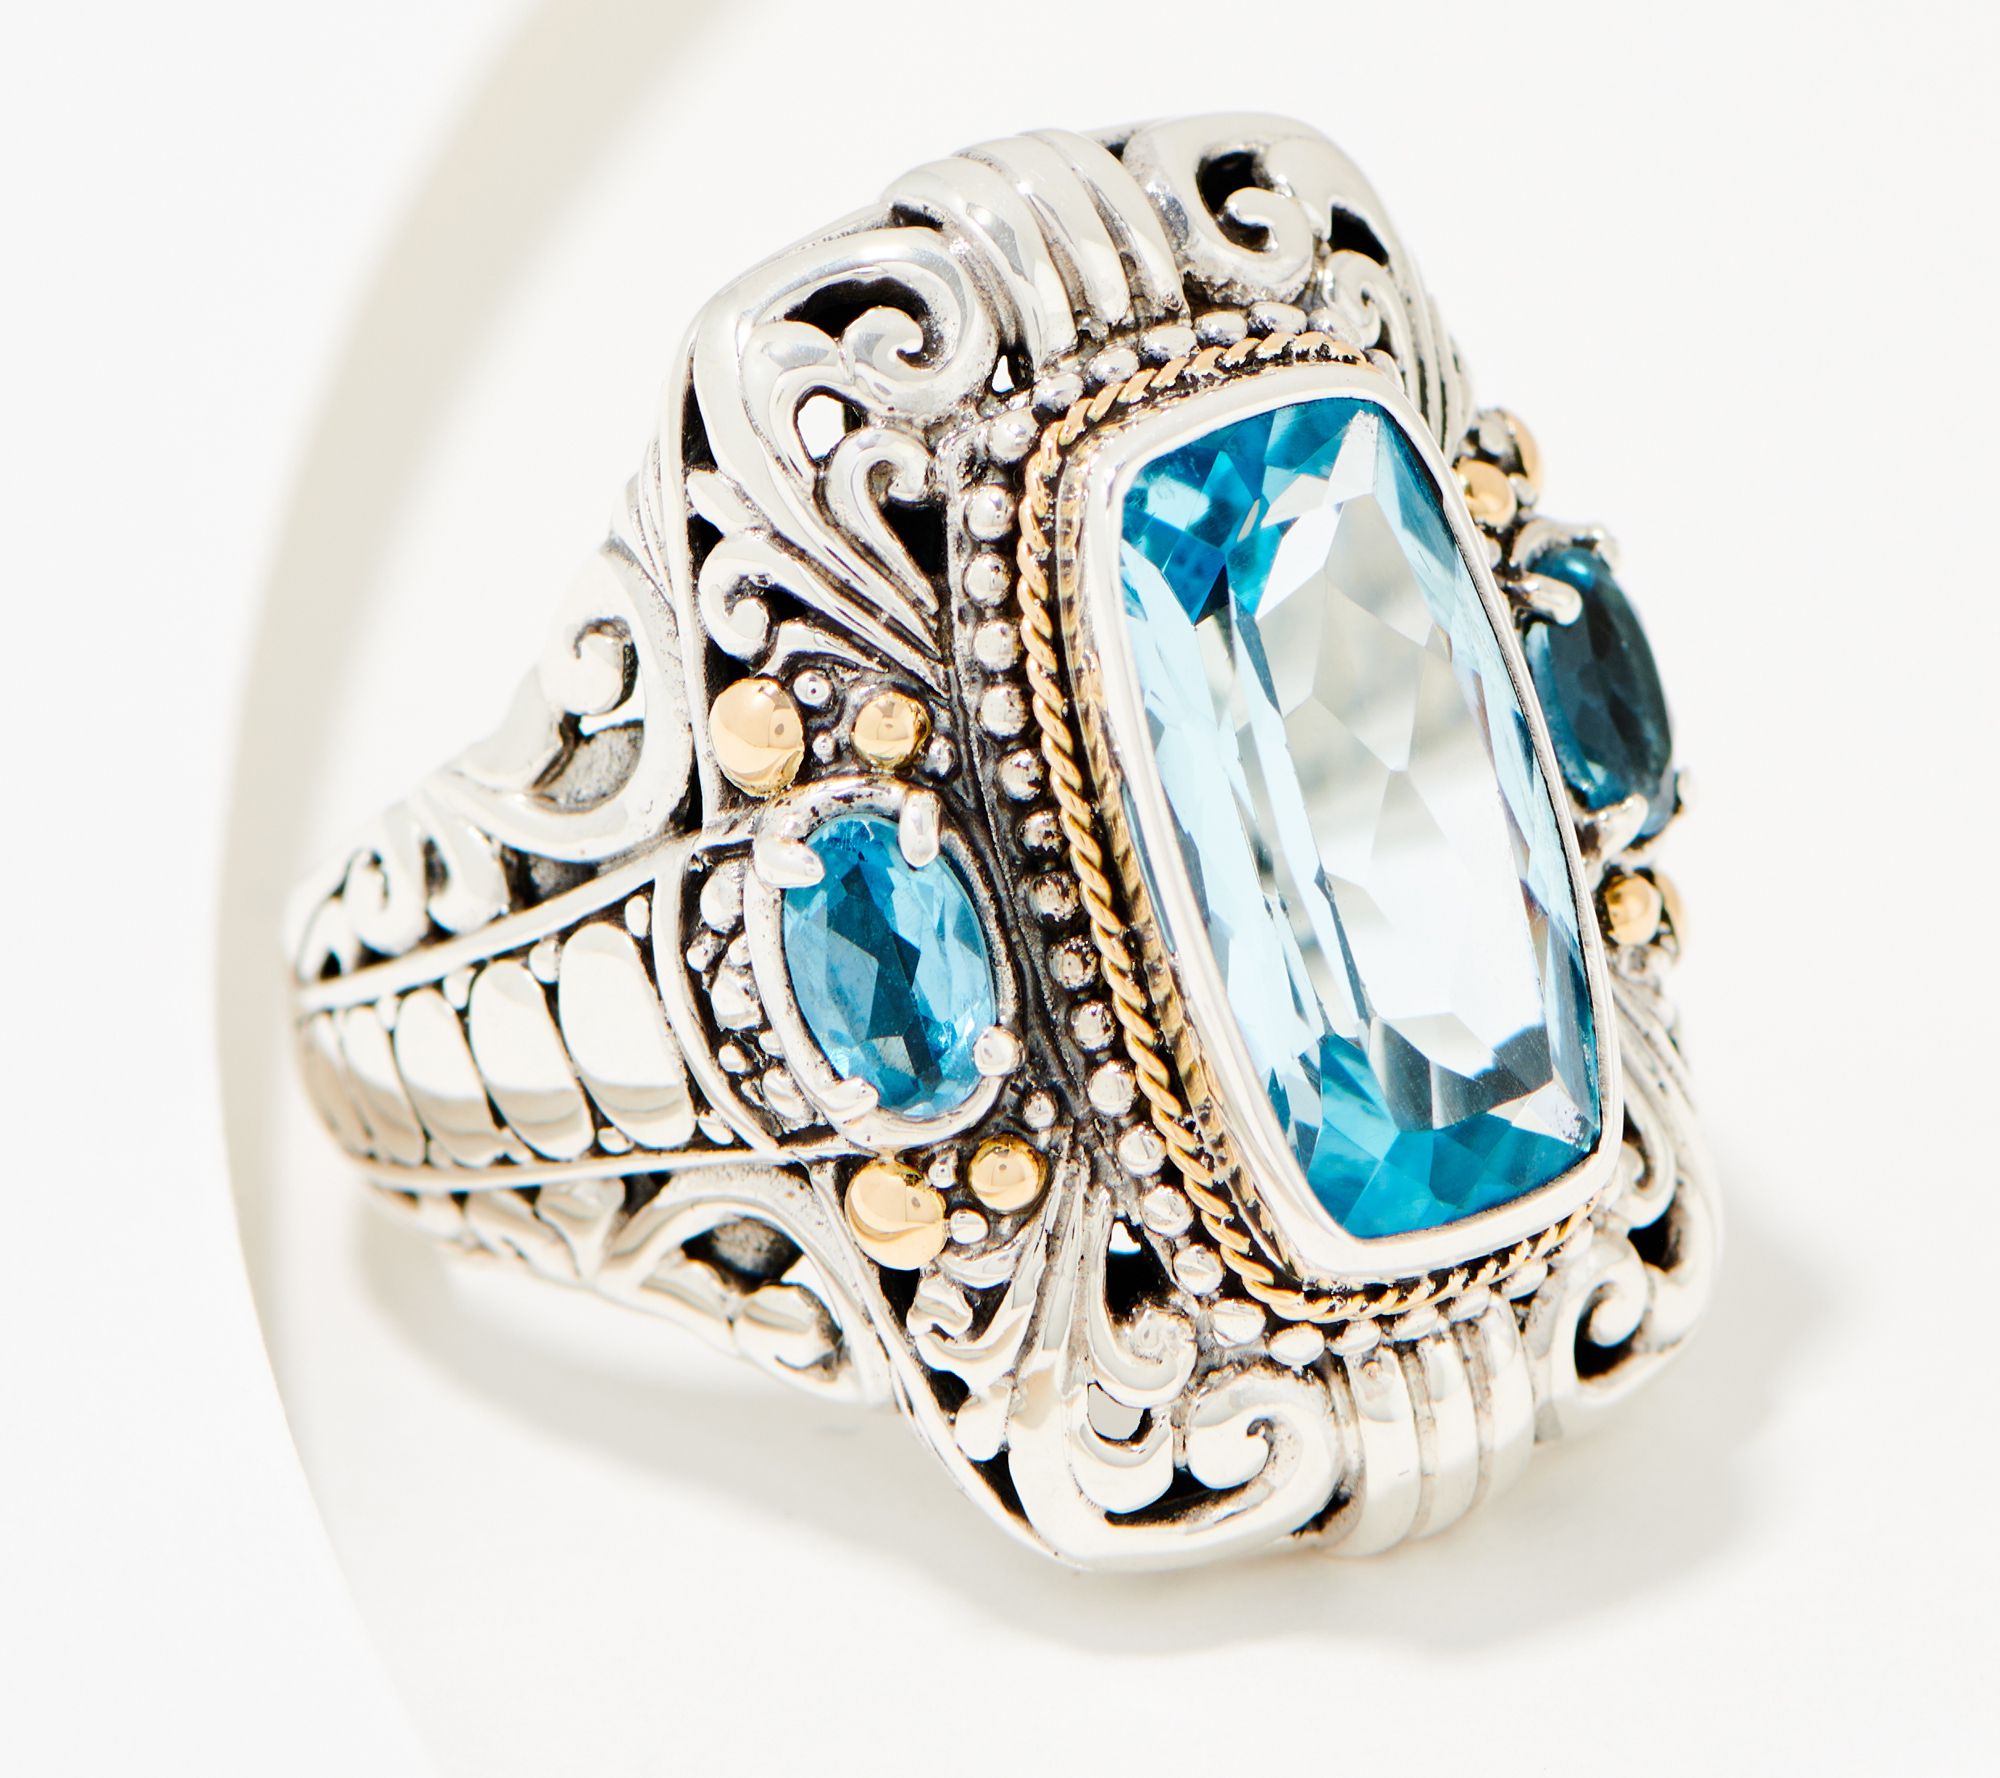 Fabulous Jewelry From Findings - Mill Lane Studio